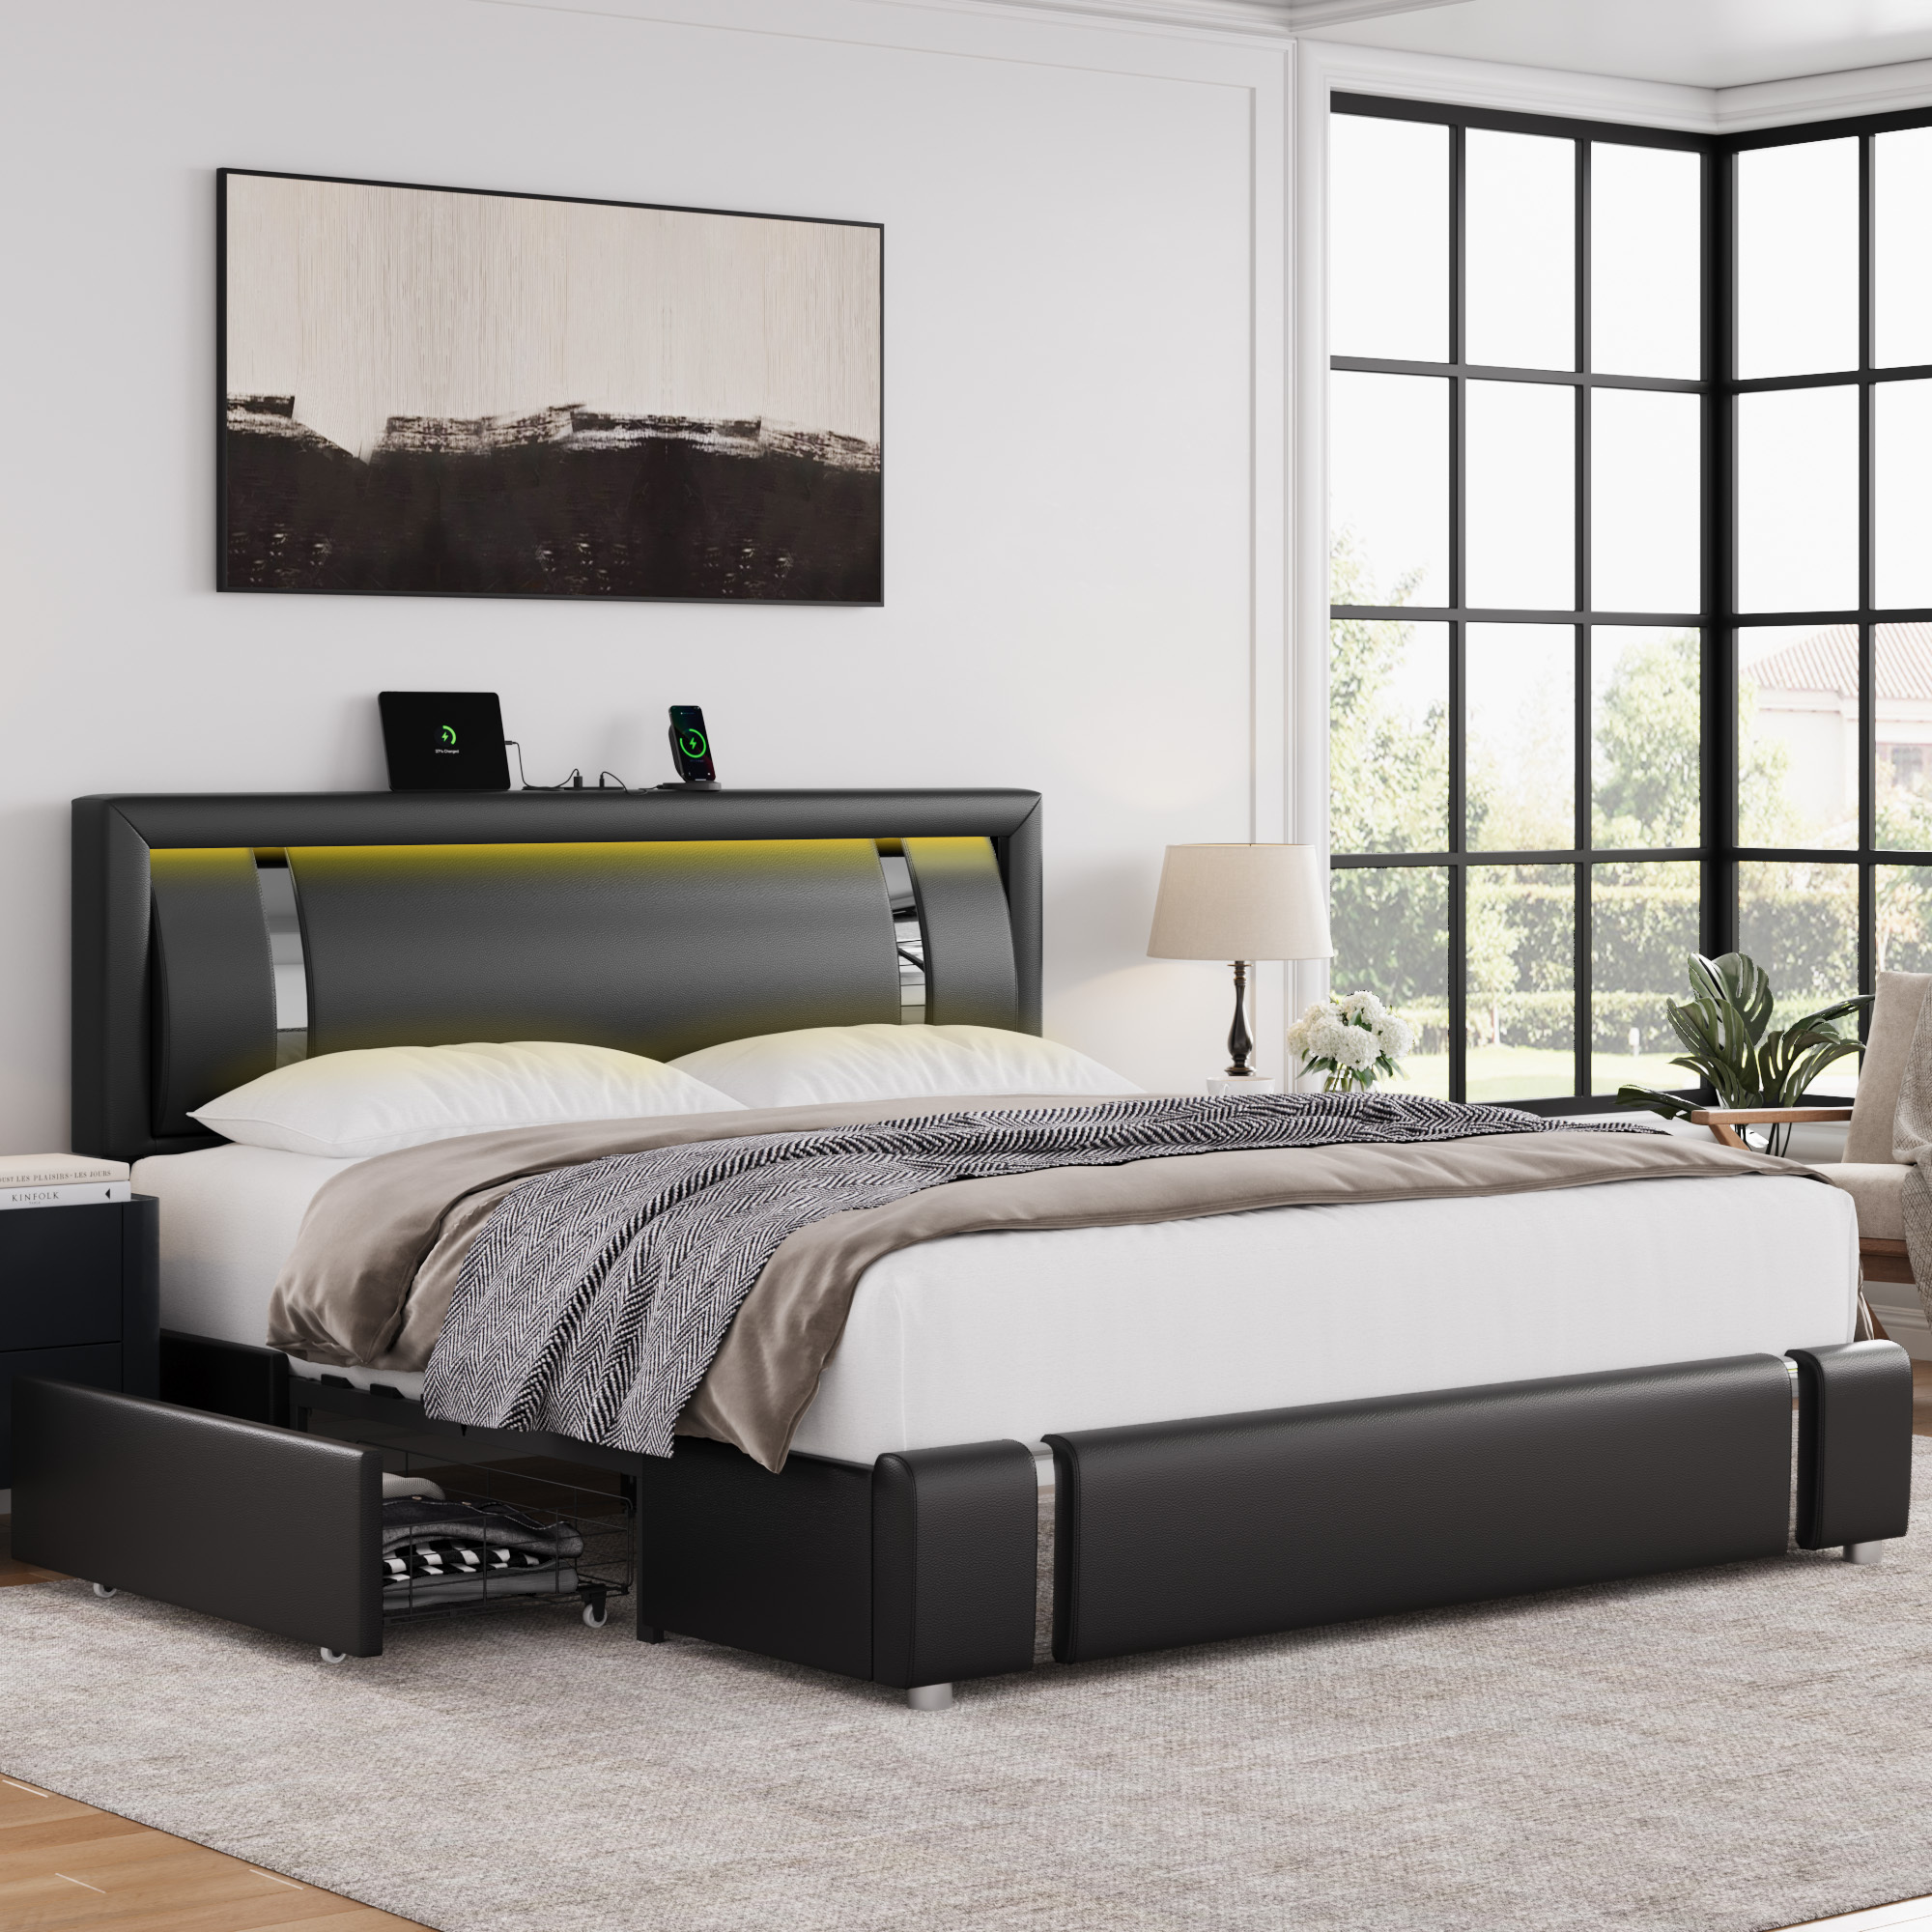 Homfa King Size LED Bed Frame with 2 Storage Drawers, Modern Leather Upholstered Platform Bed Frame with Adjustable Headboard, Black - image 5 of 11